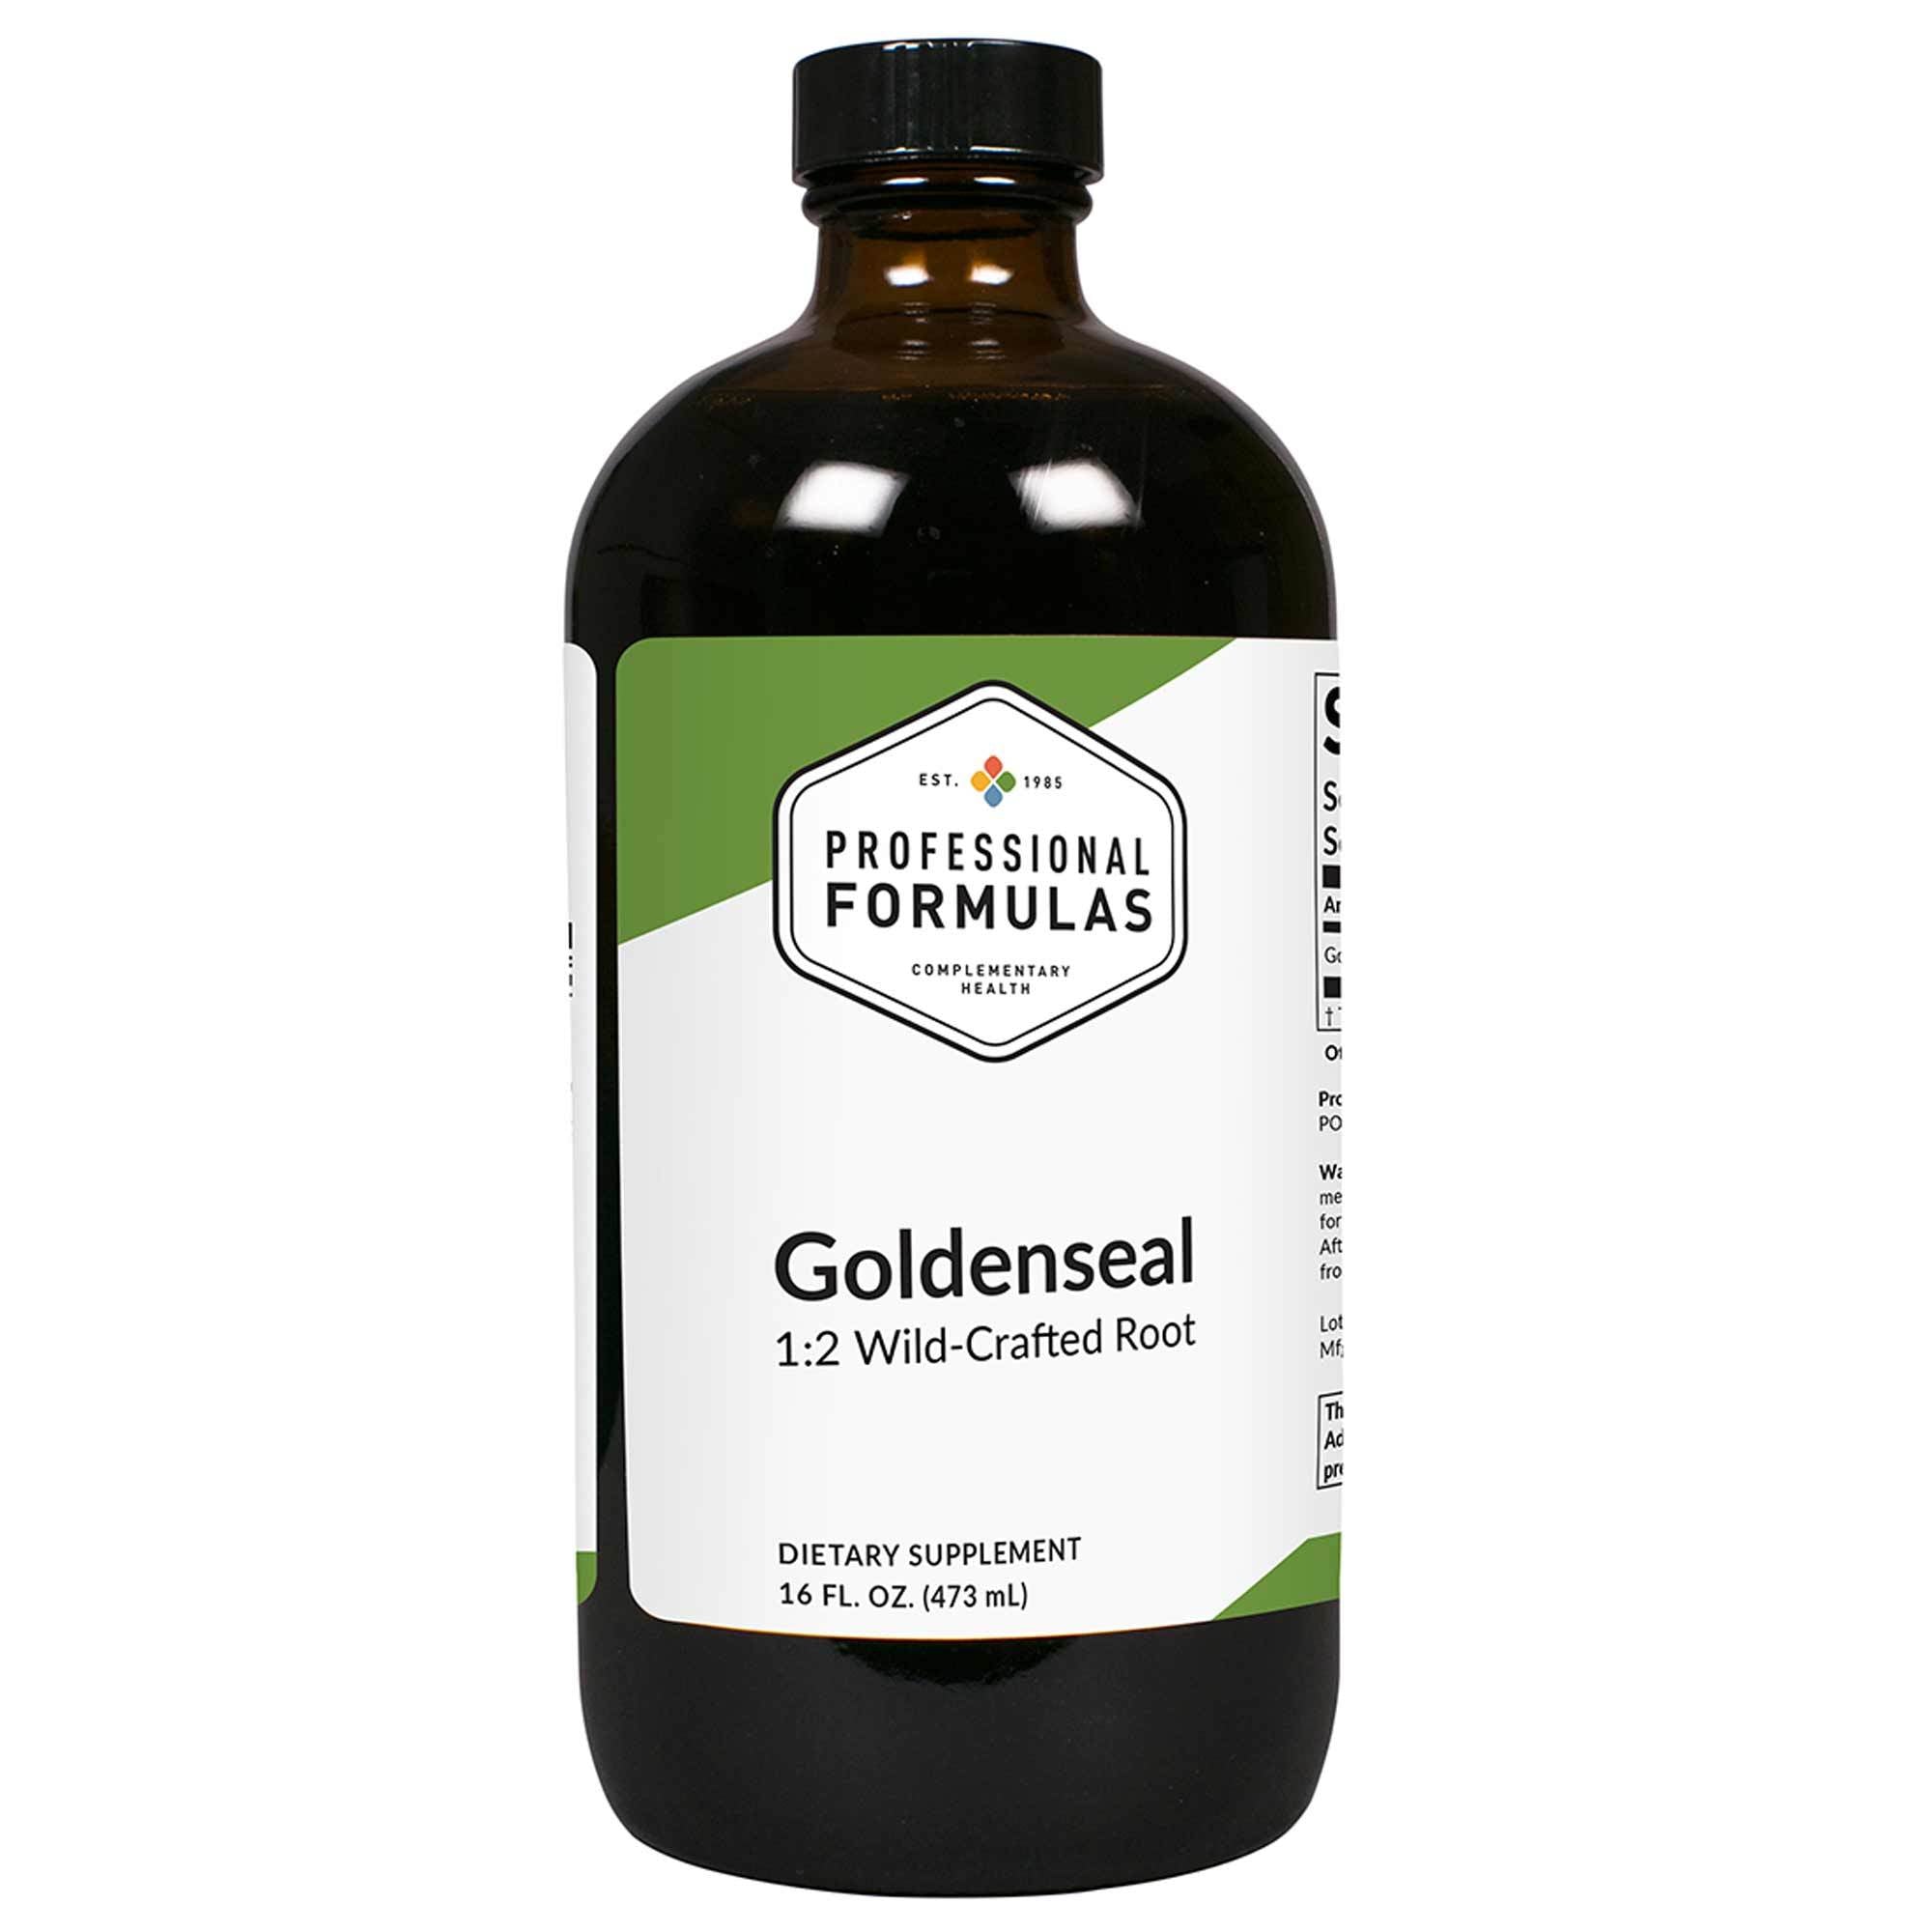 Professional Formulas - Goldenseal (Hydrastis canadensis) - 16 FL. OZ. (473 mL)